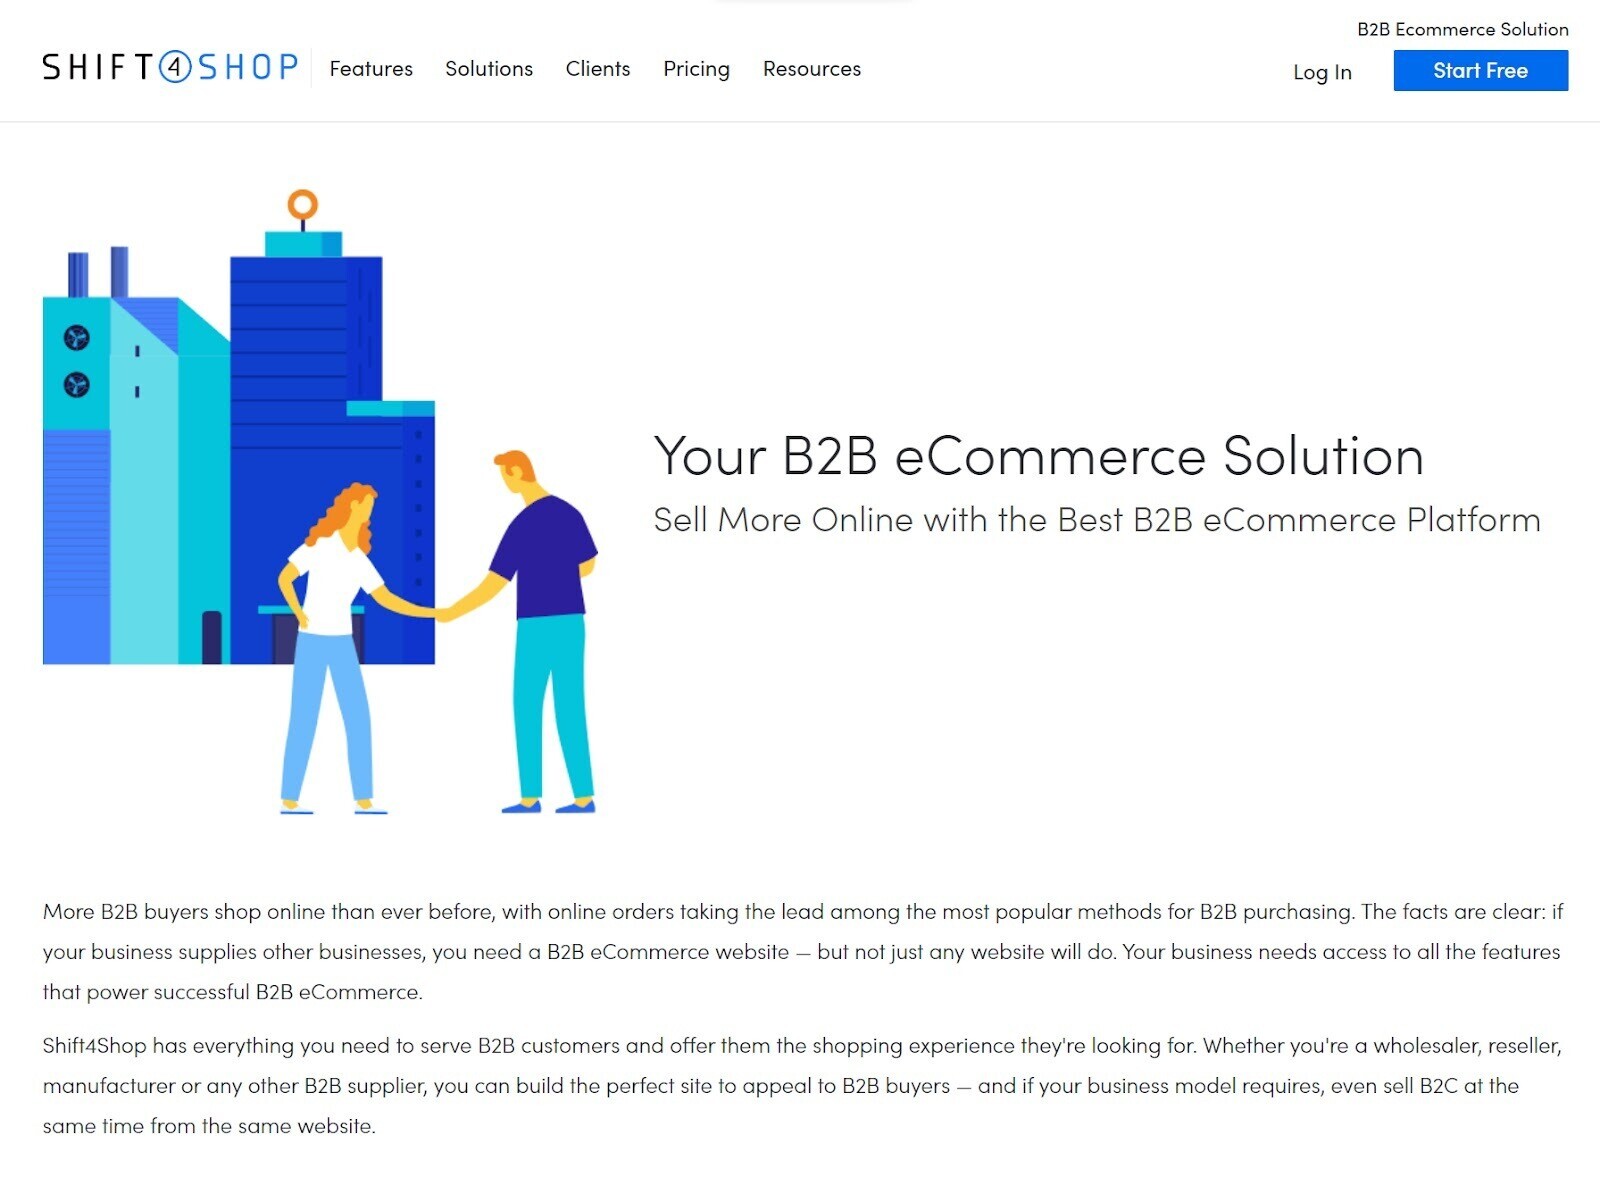 Shift4Shop's B2B ecommerce page